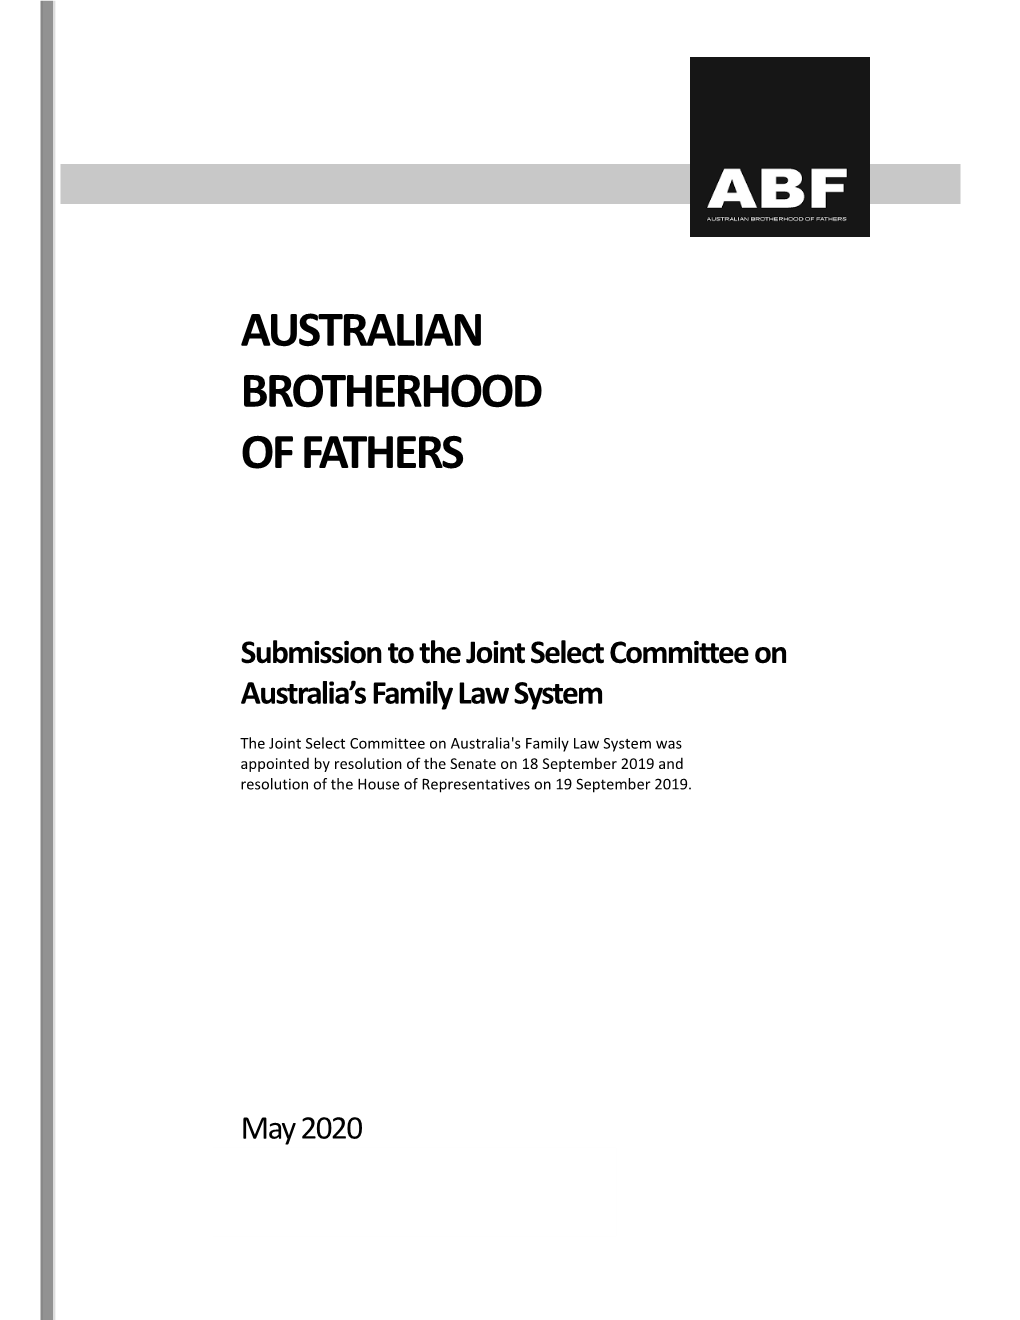 Australian Brotherhood of Fathers